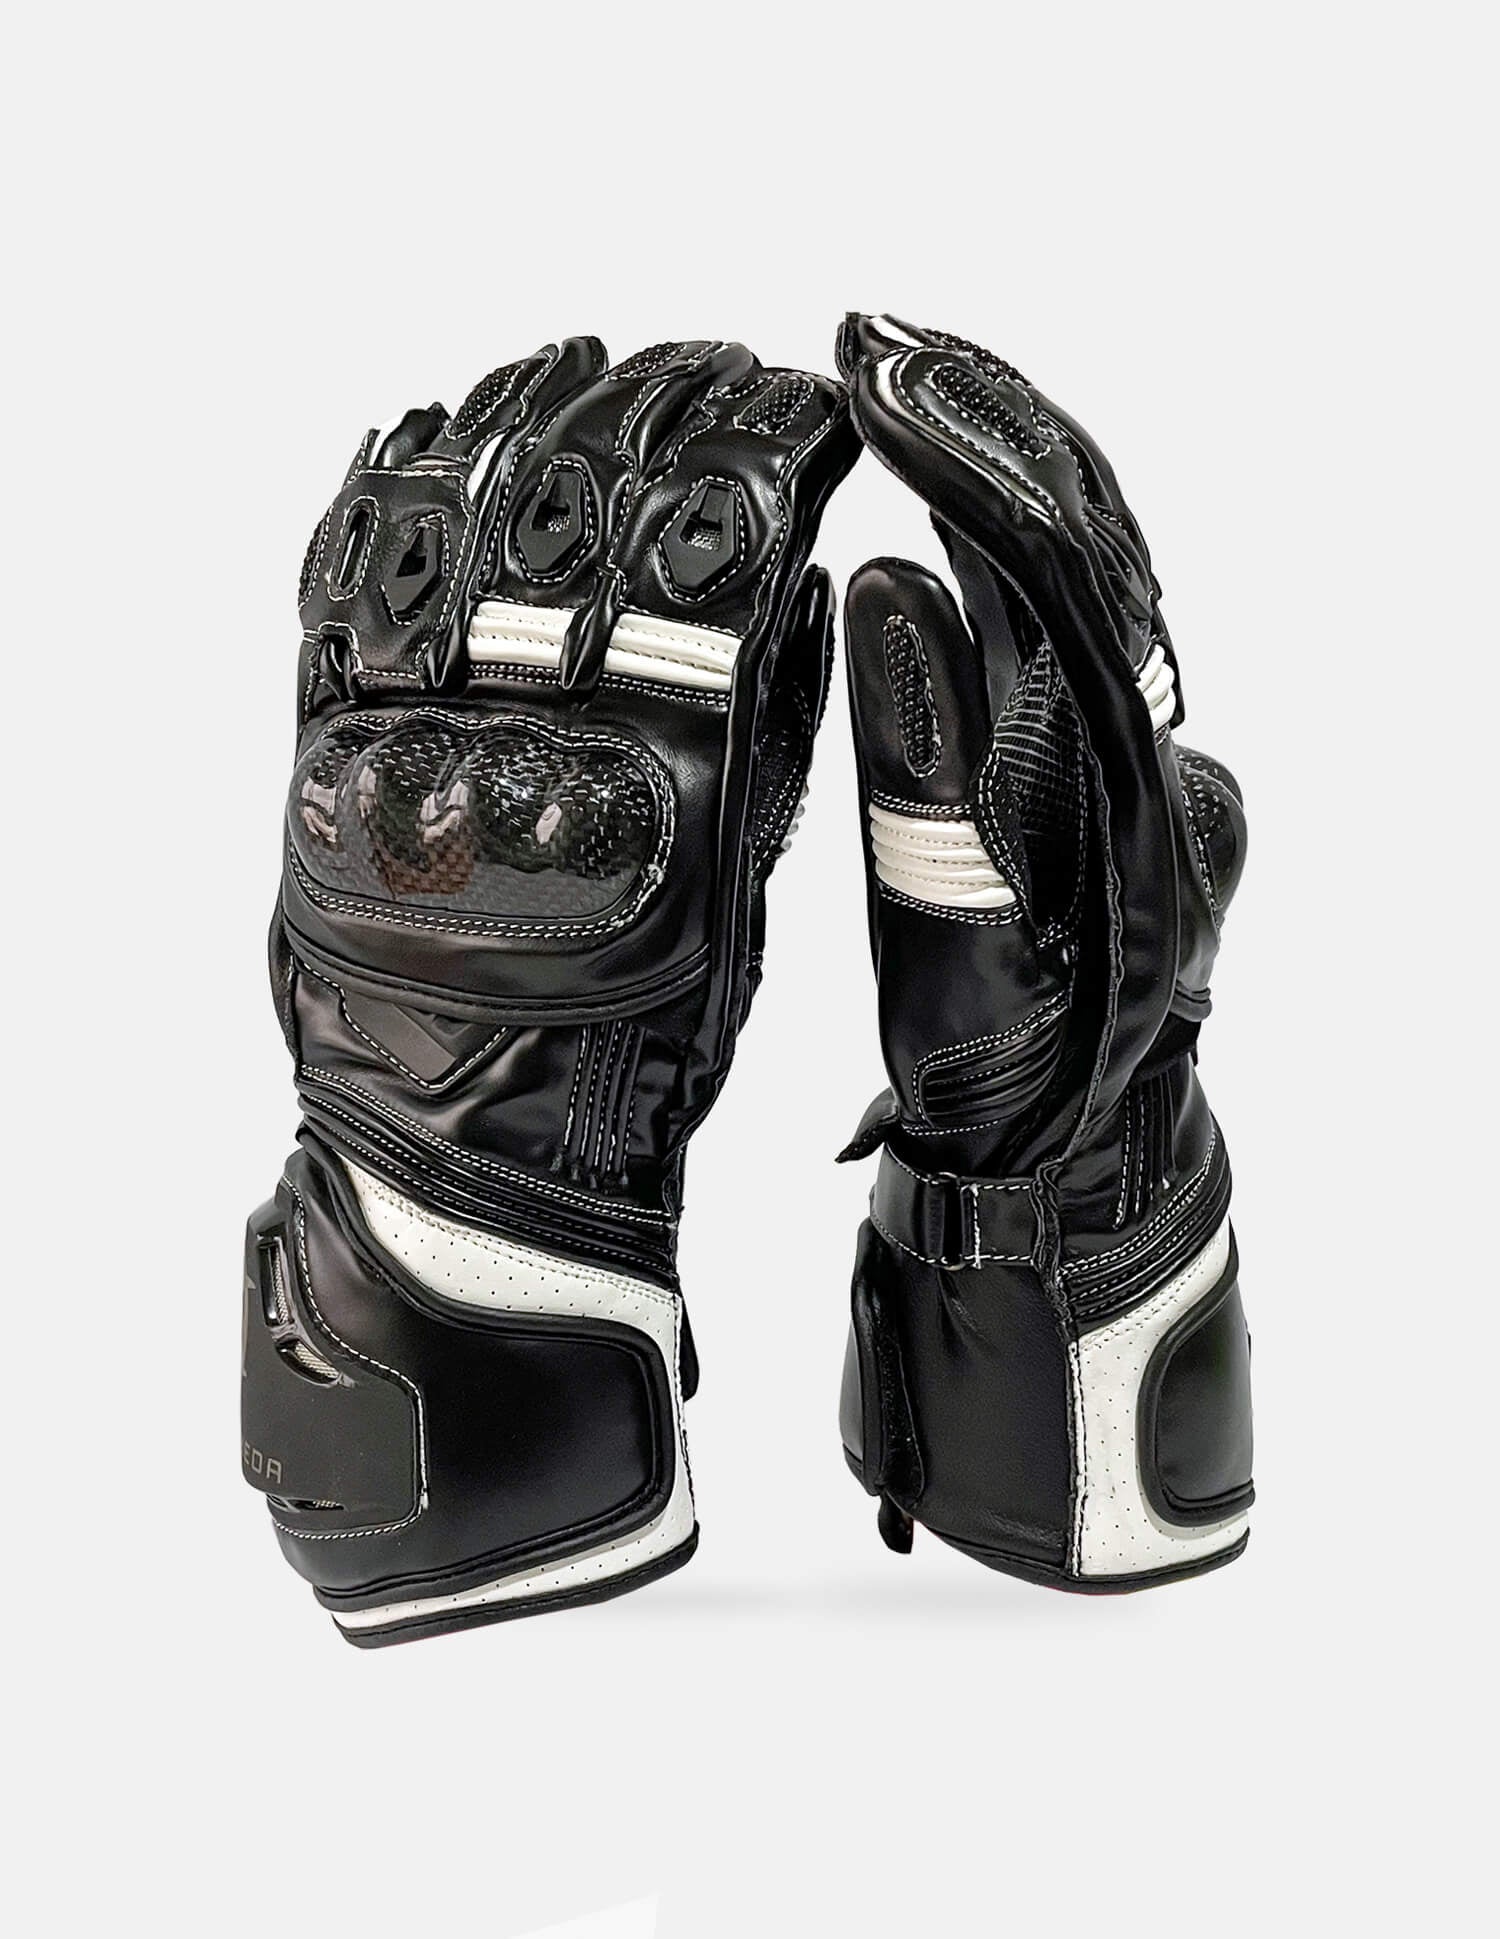 kevlar racing gloves guantes racing kevlar